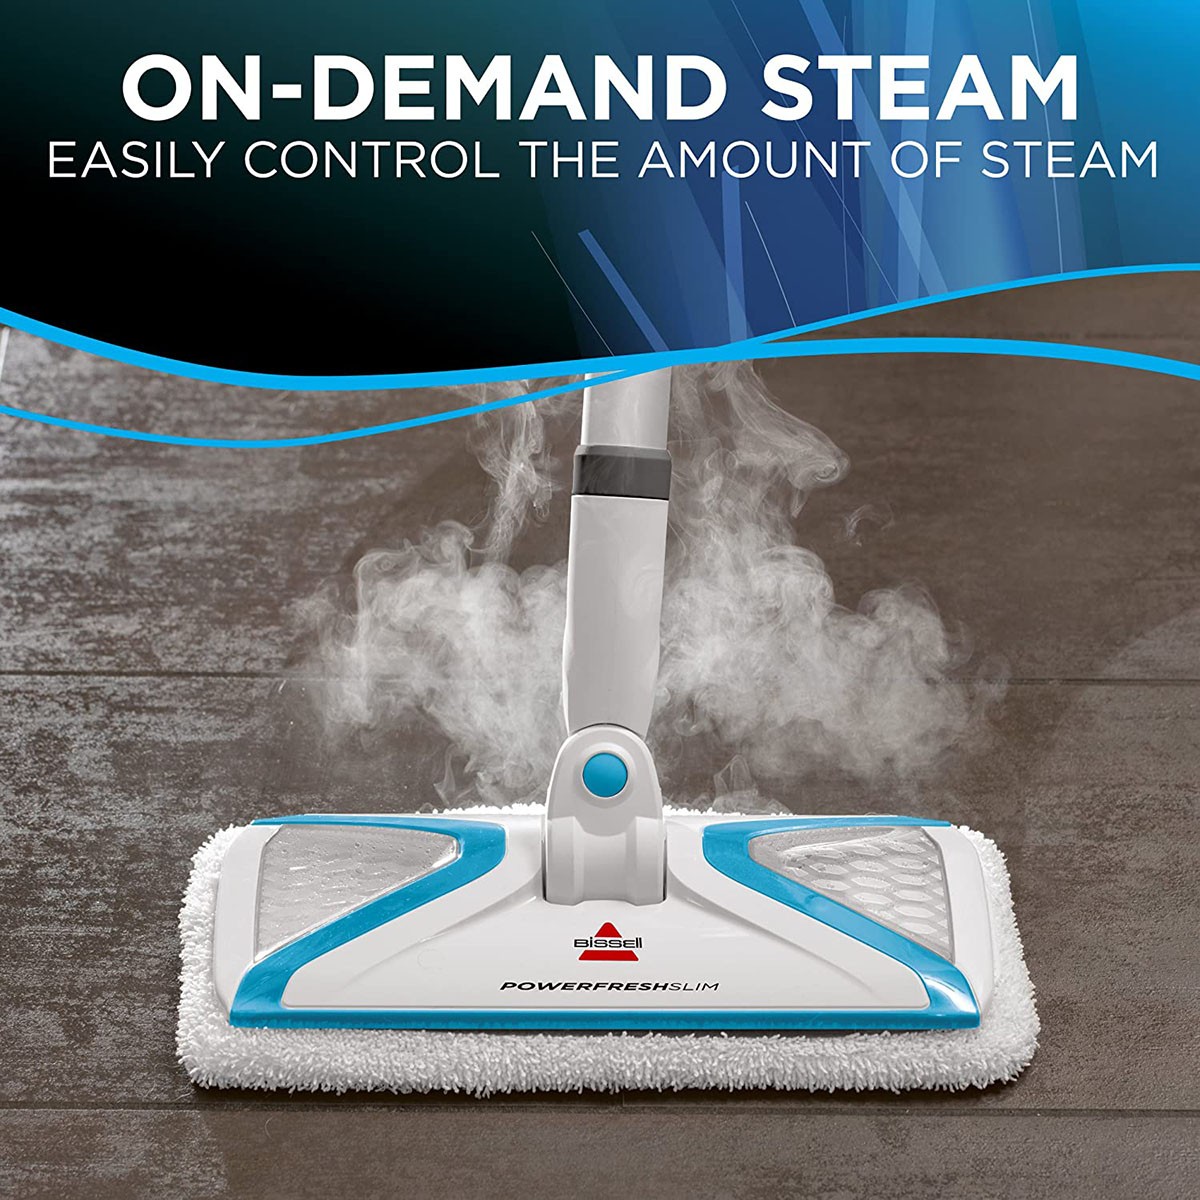 https://s3-assets.sylvane.com/media/images/products/bissell-2075-powerfresh-slim-steam-mop-on-demand-steam.jpg